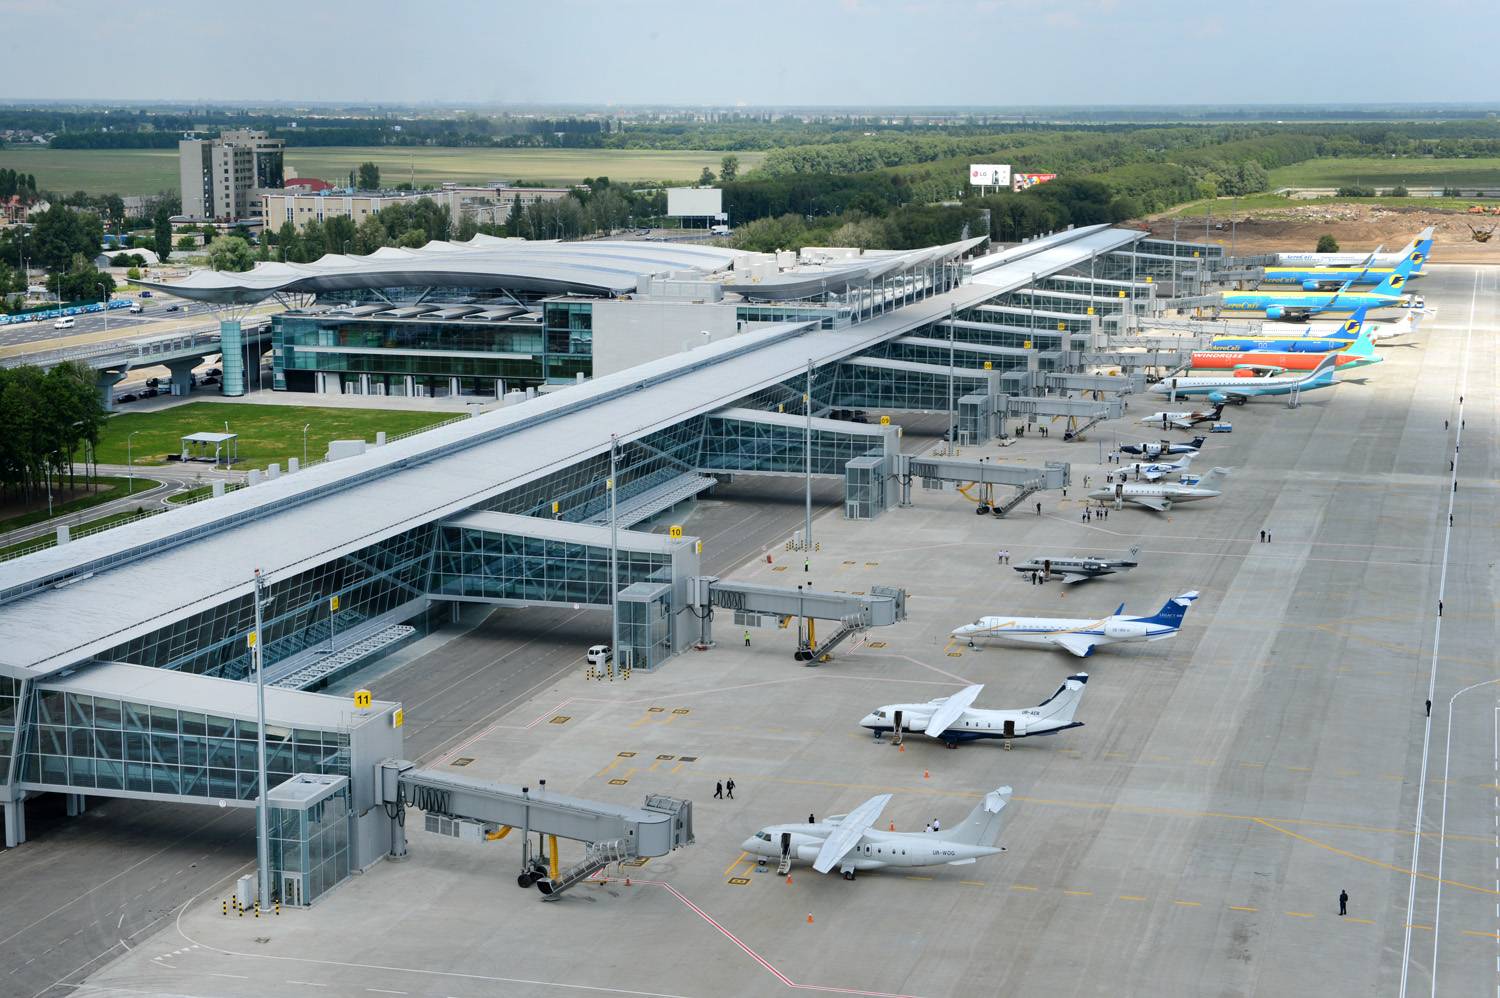 Схема аэропорта франкфурт-на-майне на русском языке